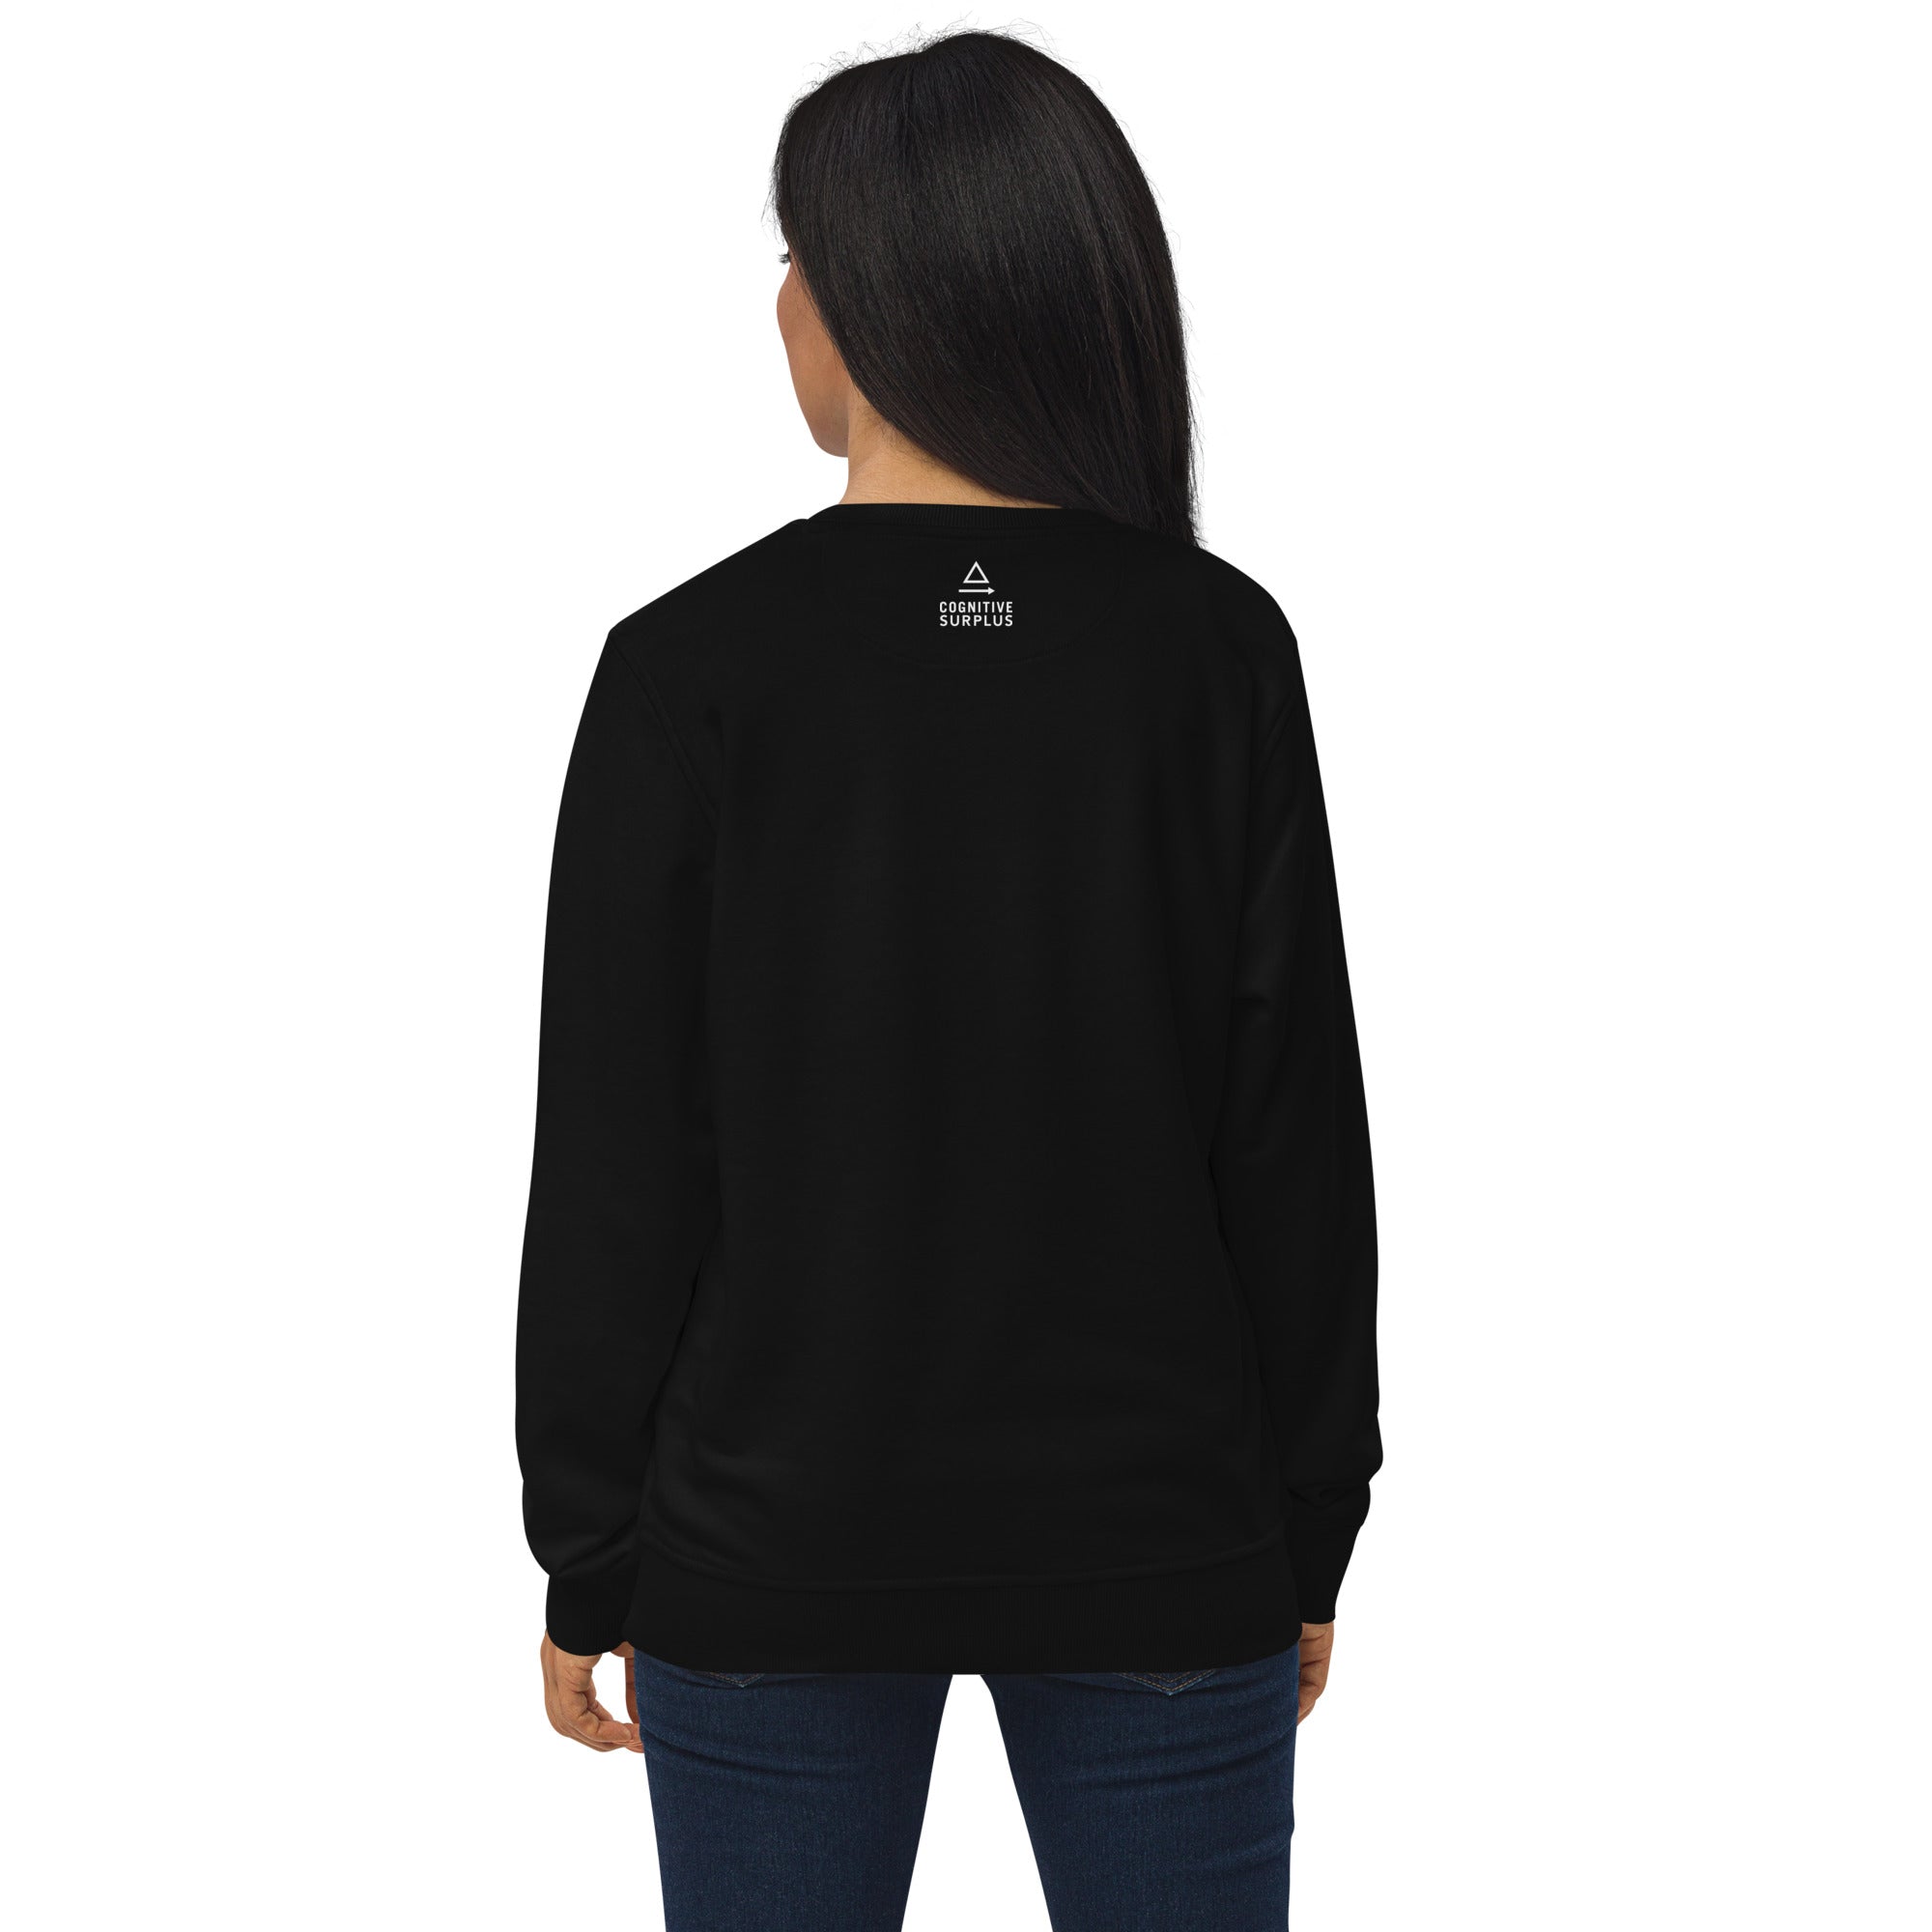 unisex-organic-sweatshirt-black-back-6570c1dfad7a2.jpg